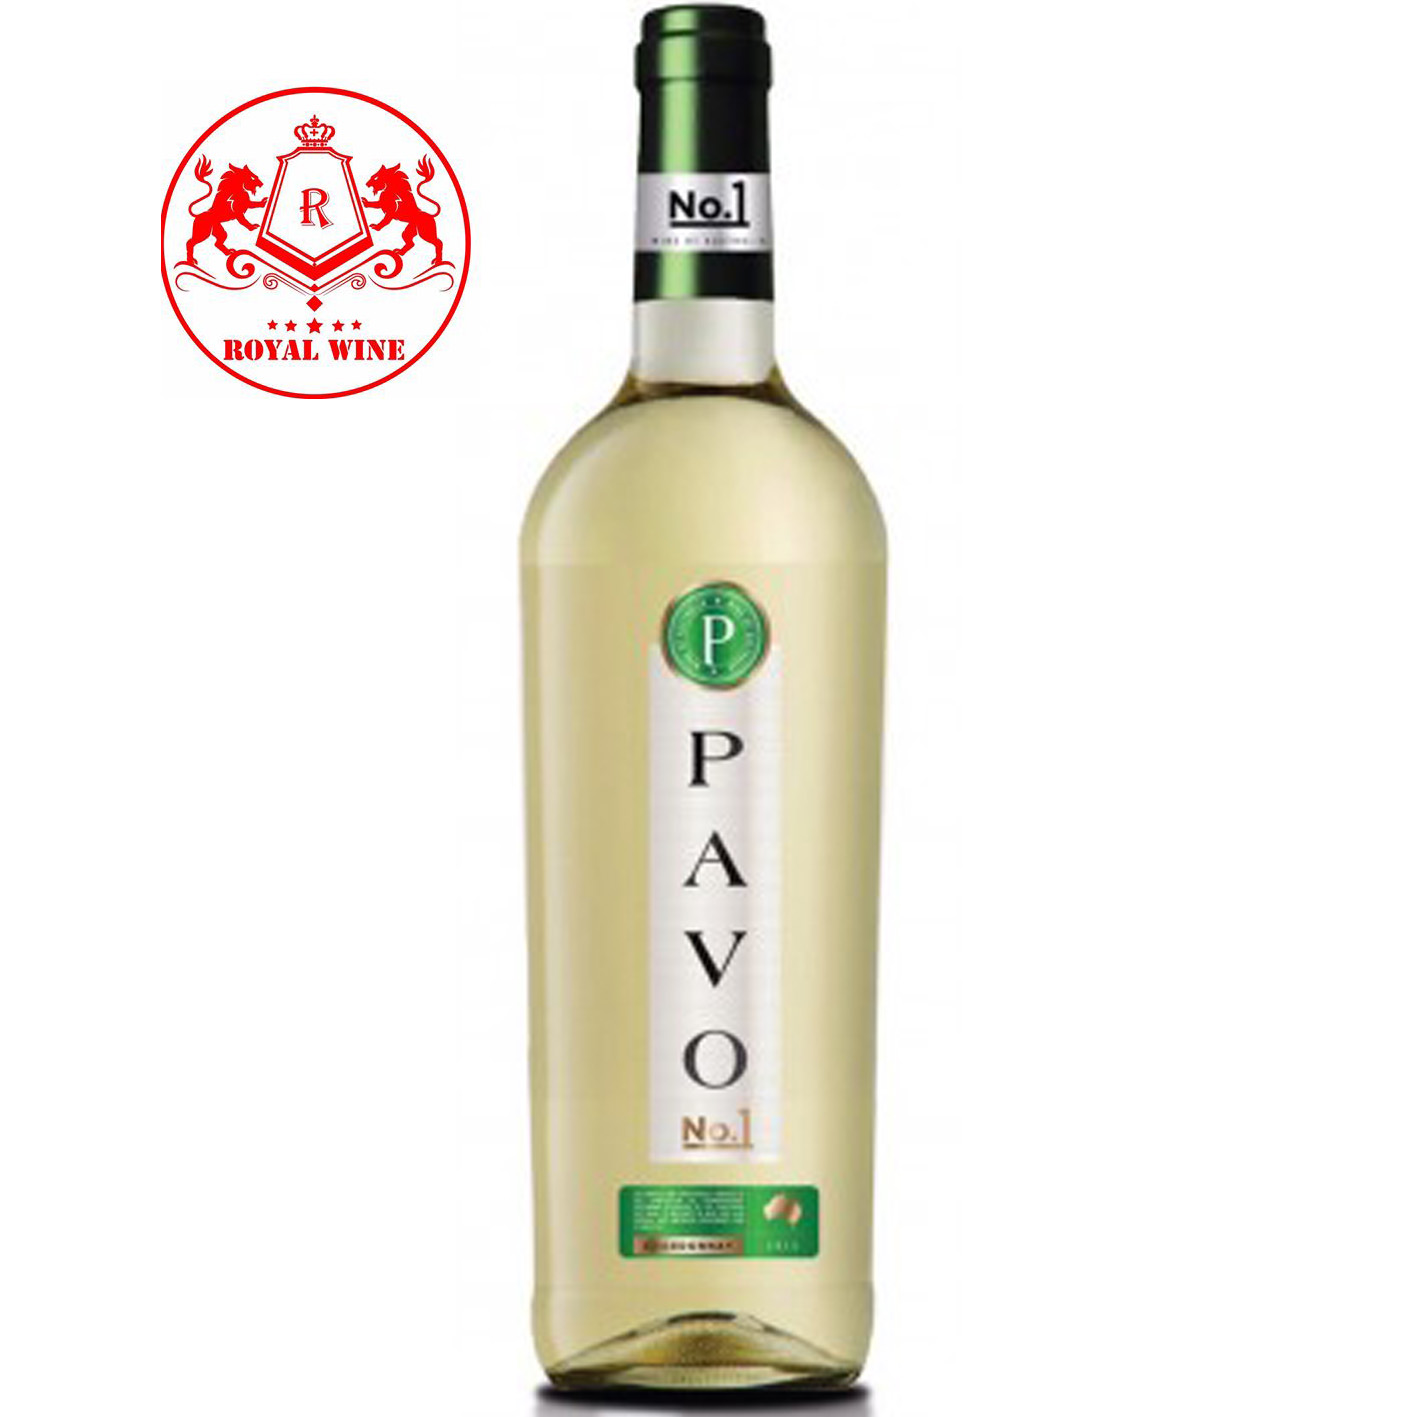 PAVO No1 Chardonnay